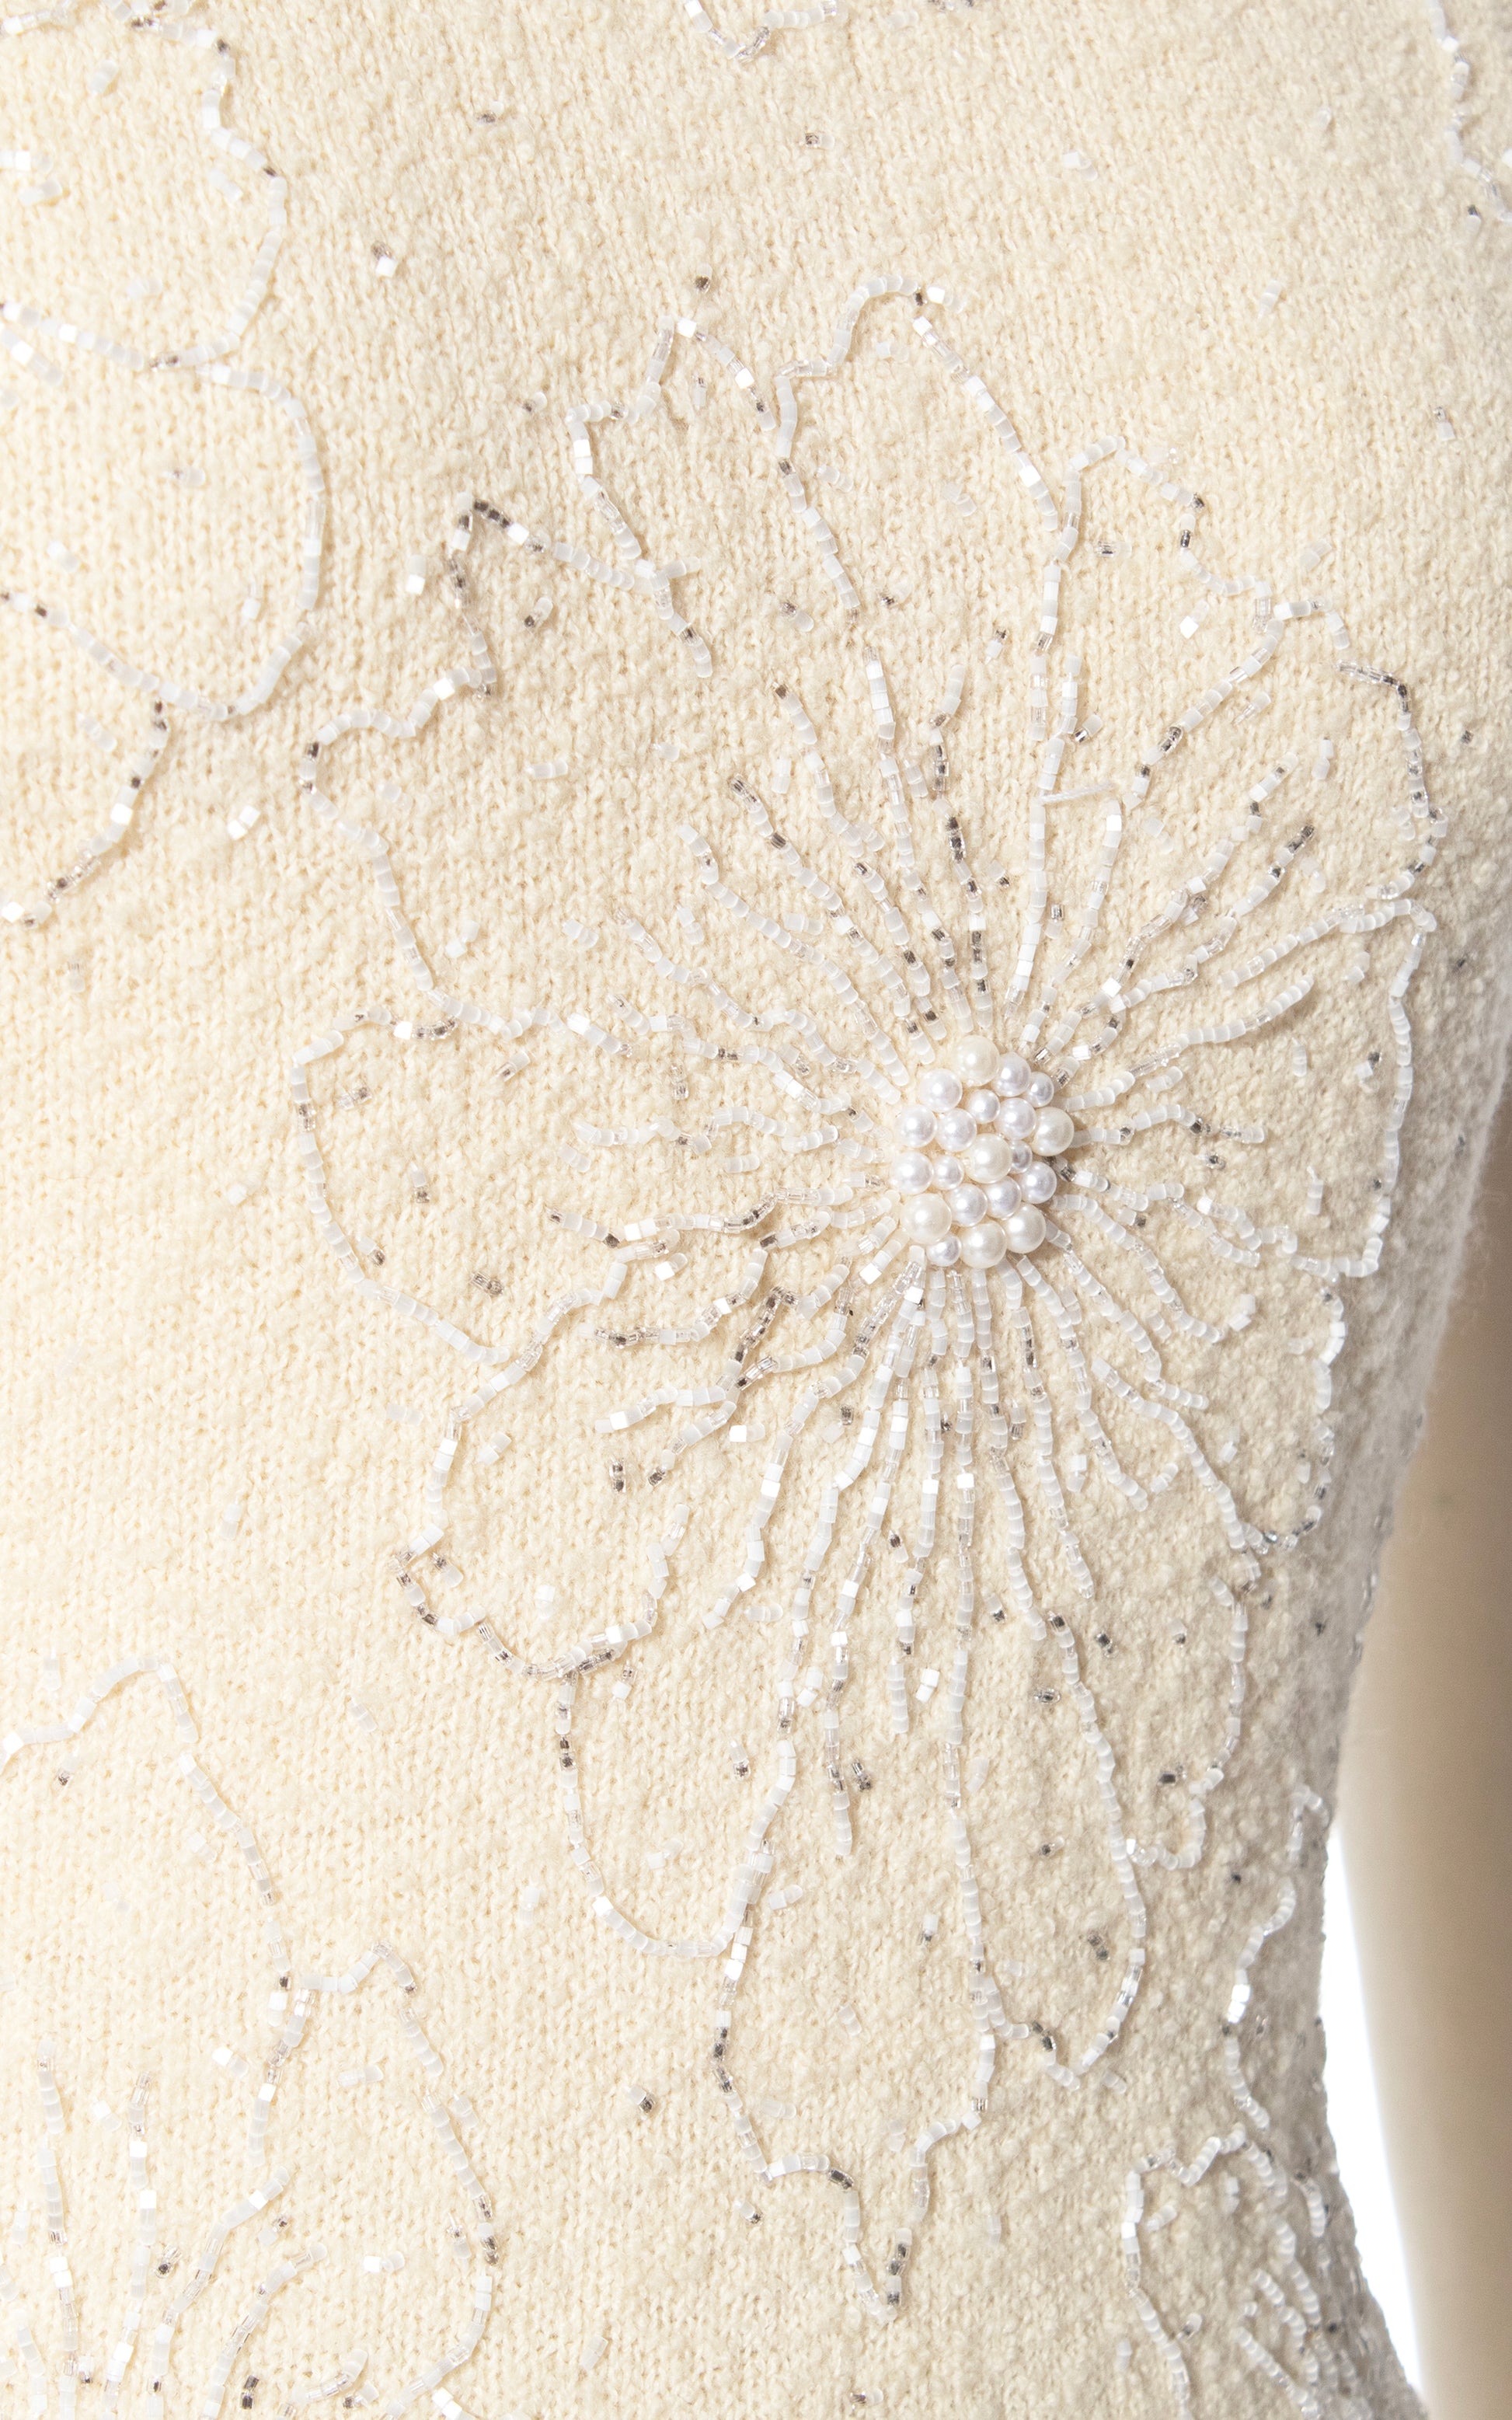 Vintage 60s 1960s GENE SHELLY Cream Floral Beaded Knit Wool Dress Bridal Wedding Gown BirthdayLifeVintage